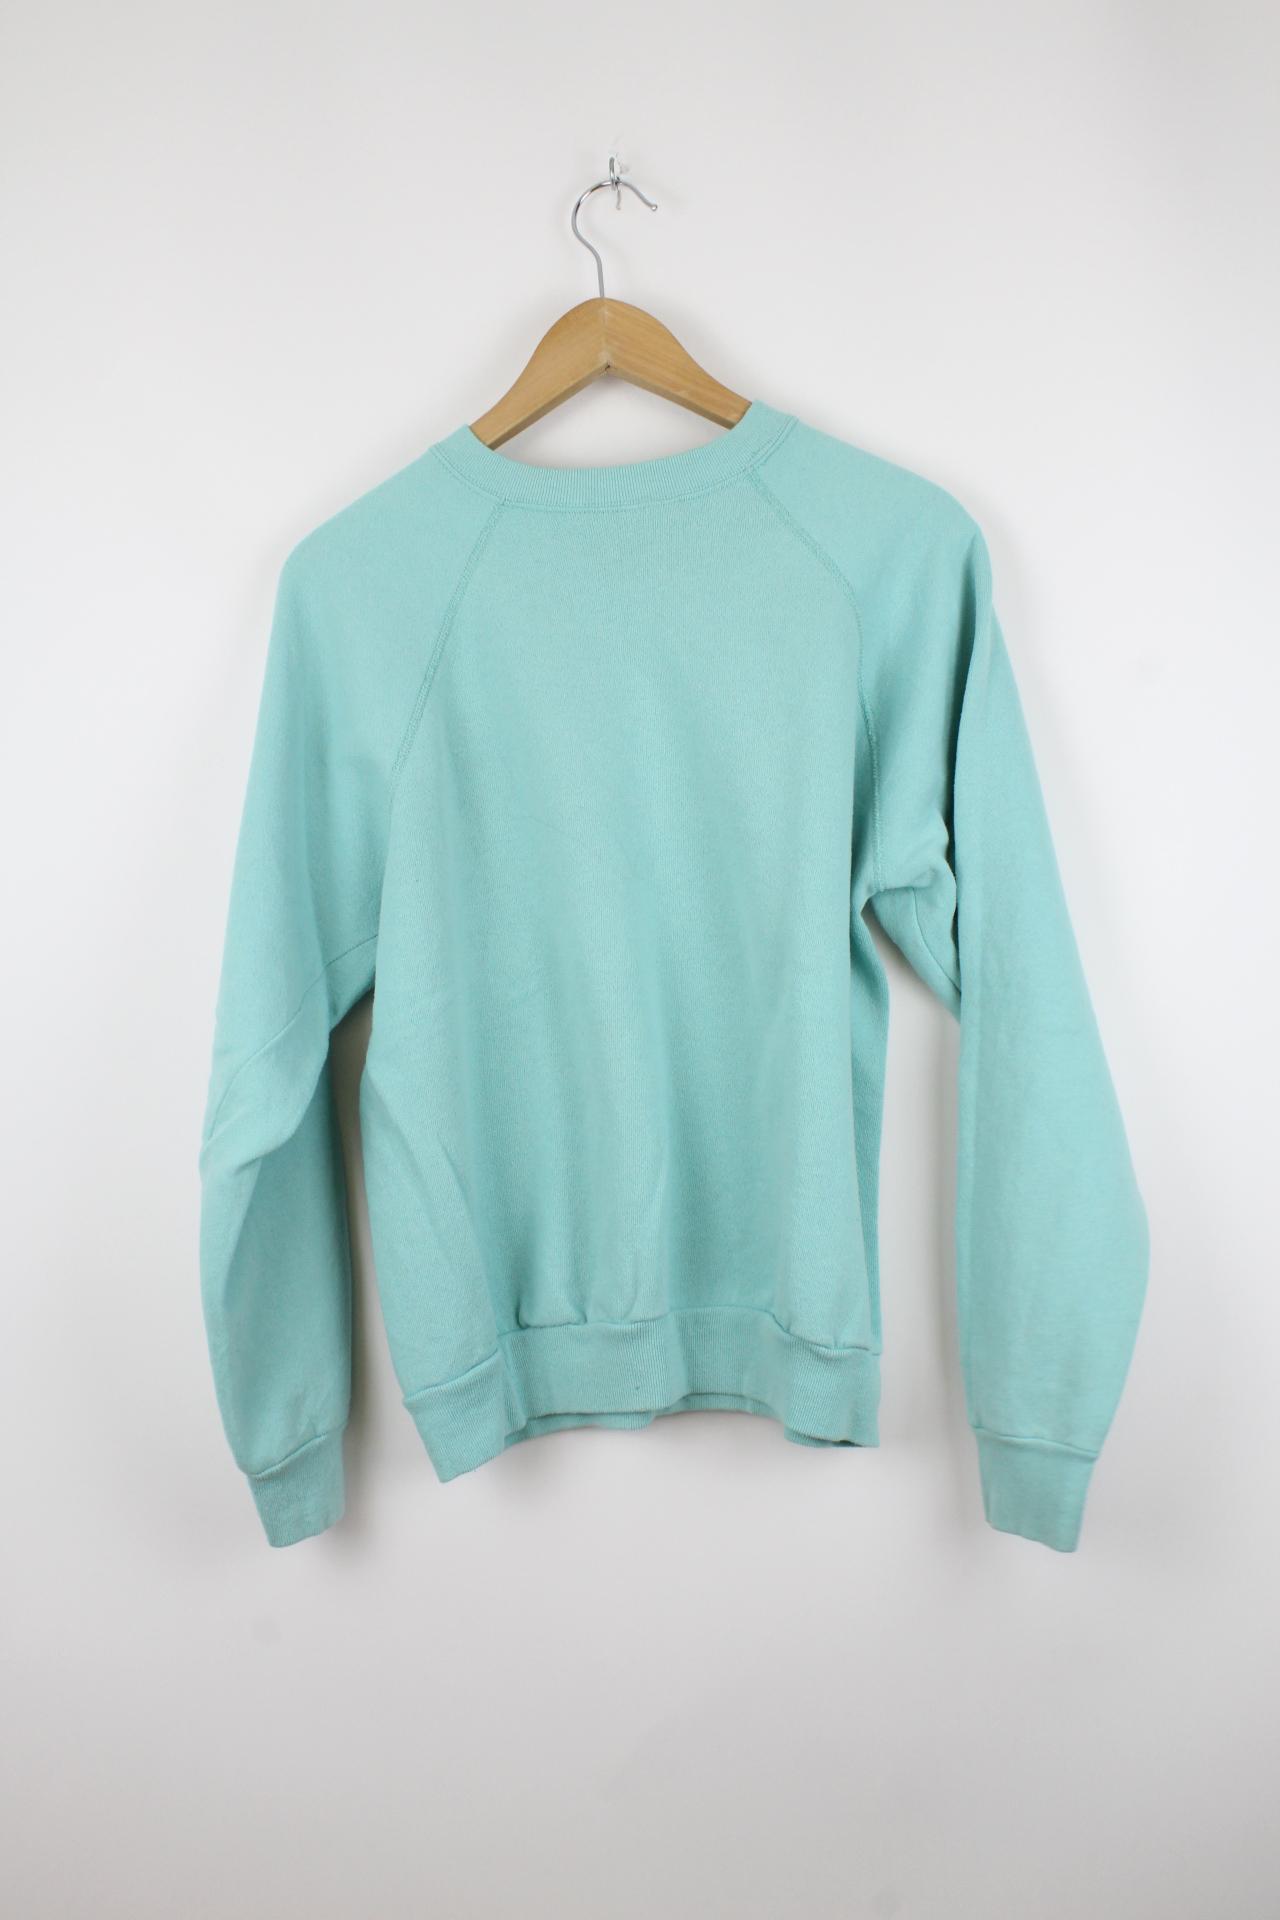 Basic Sweater Blau - M